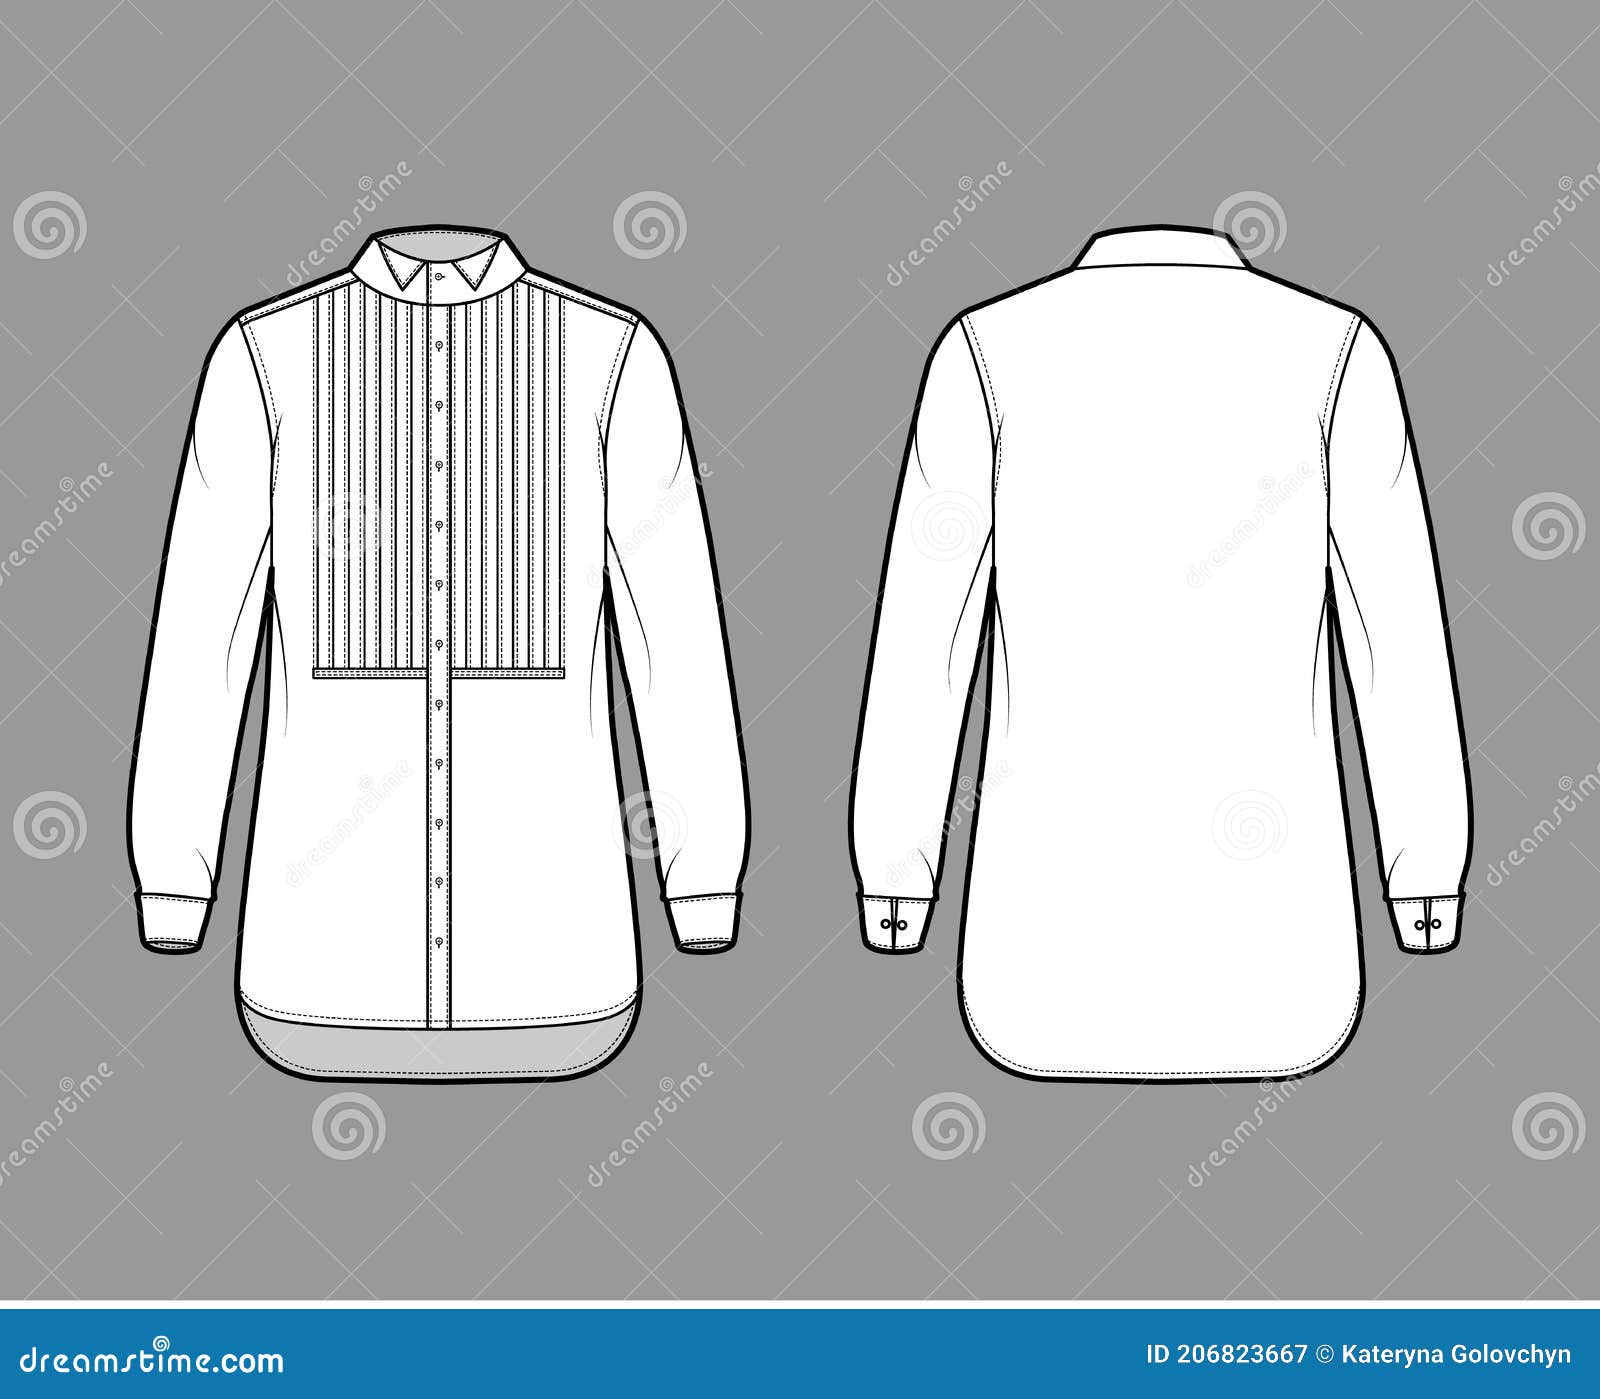 Shirt Tuxedo Dress Technical Fashion Illustration with Pleated ...